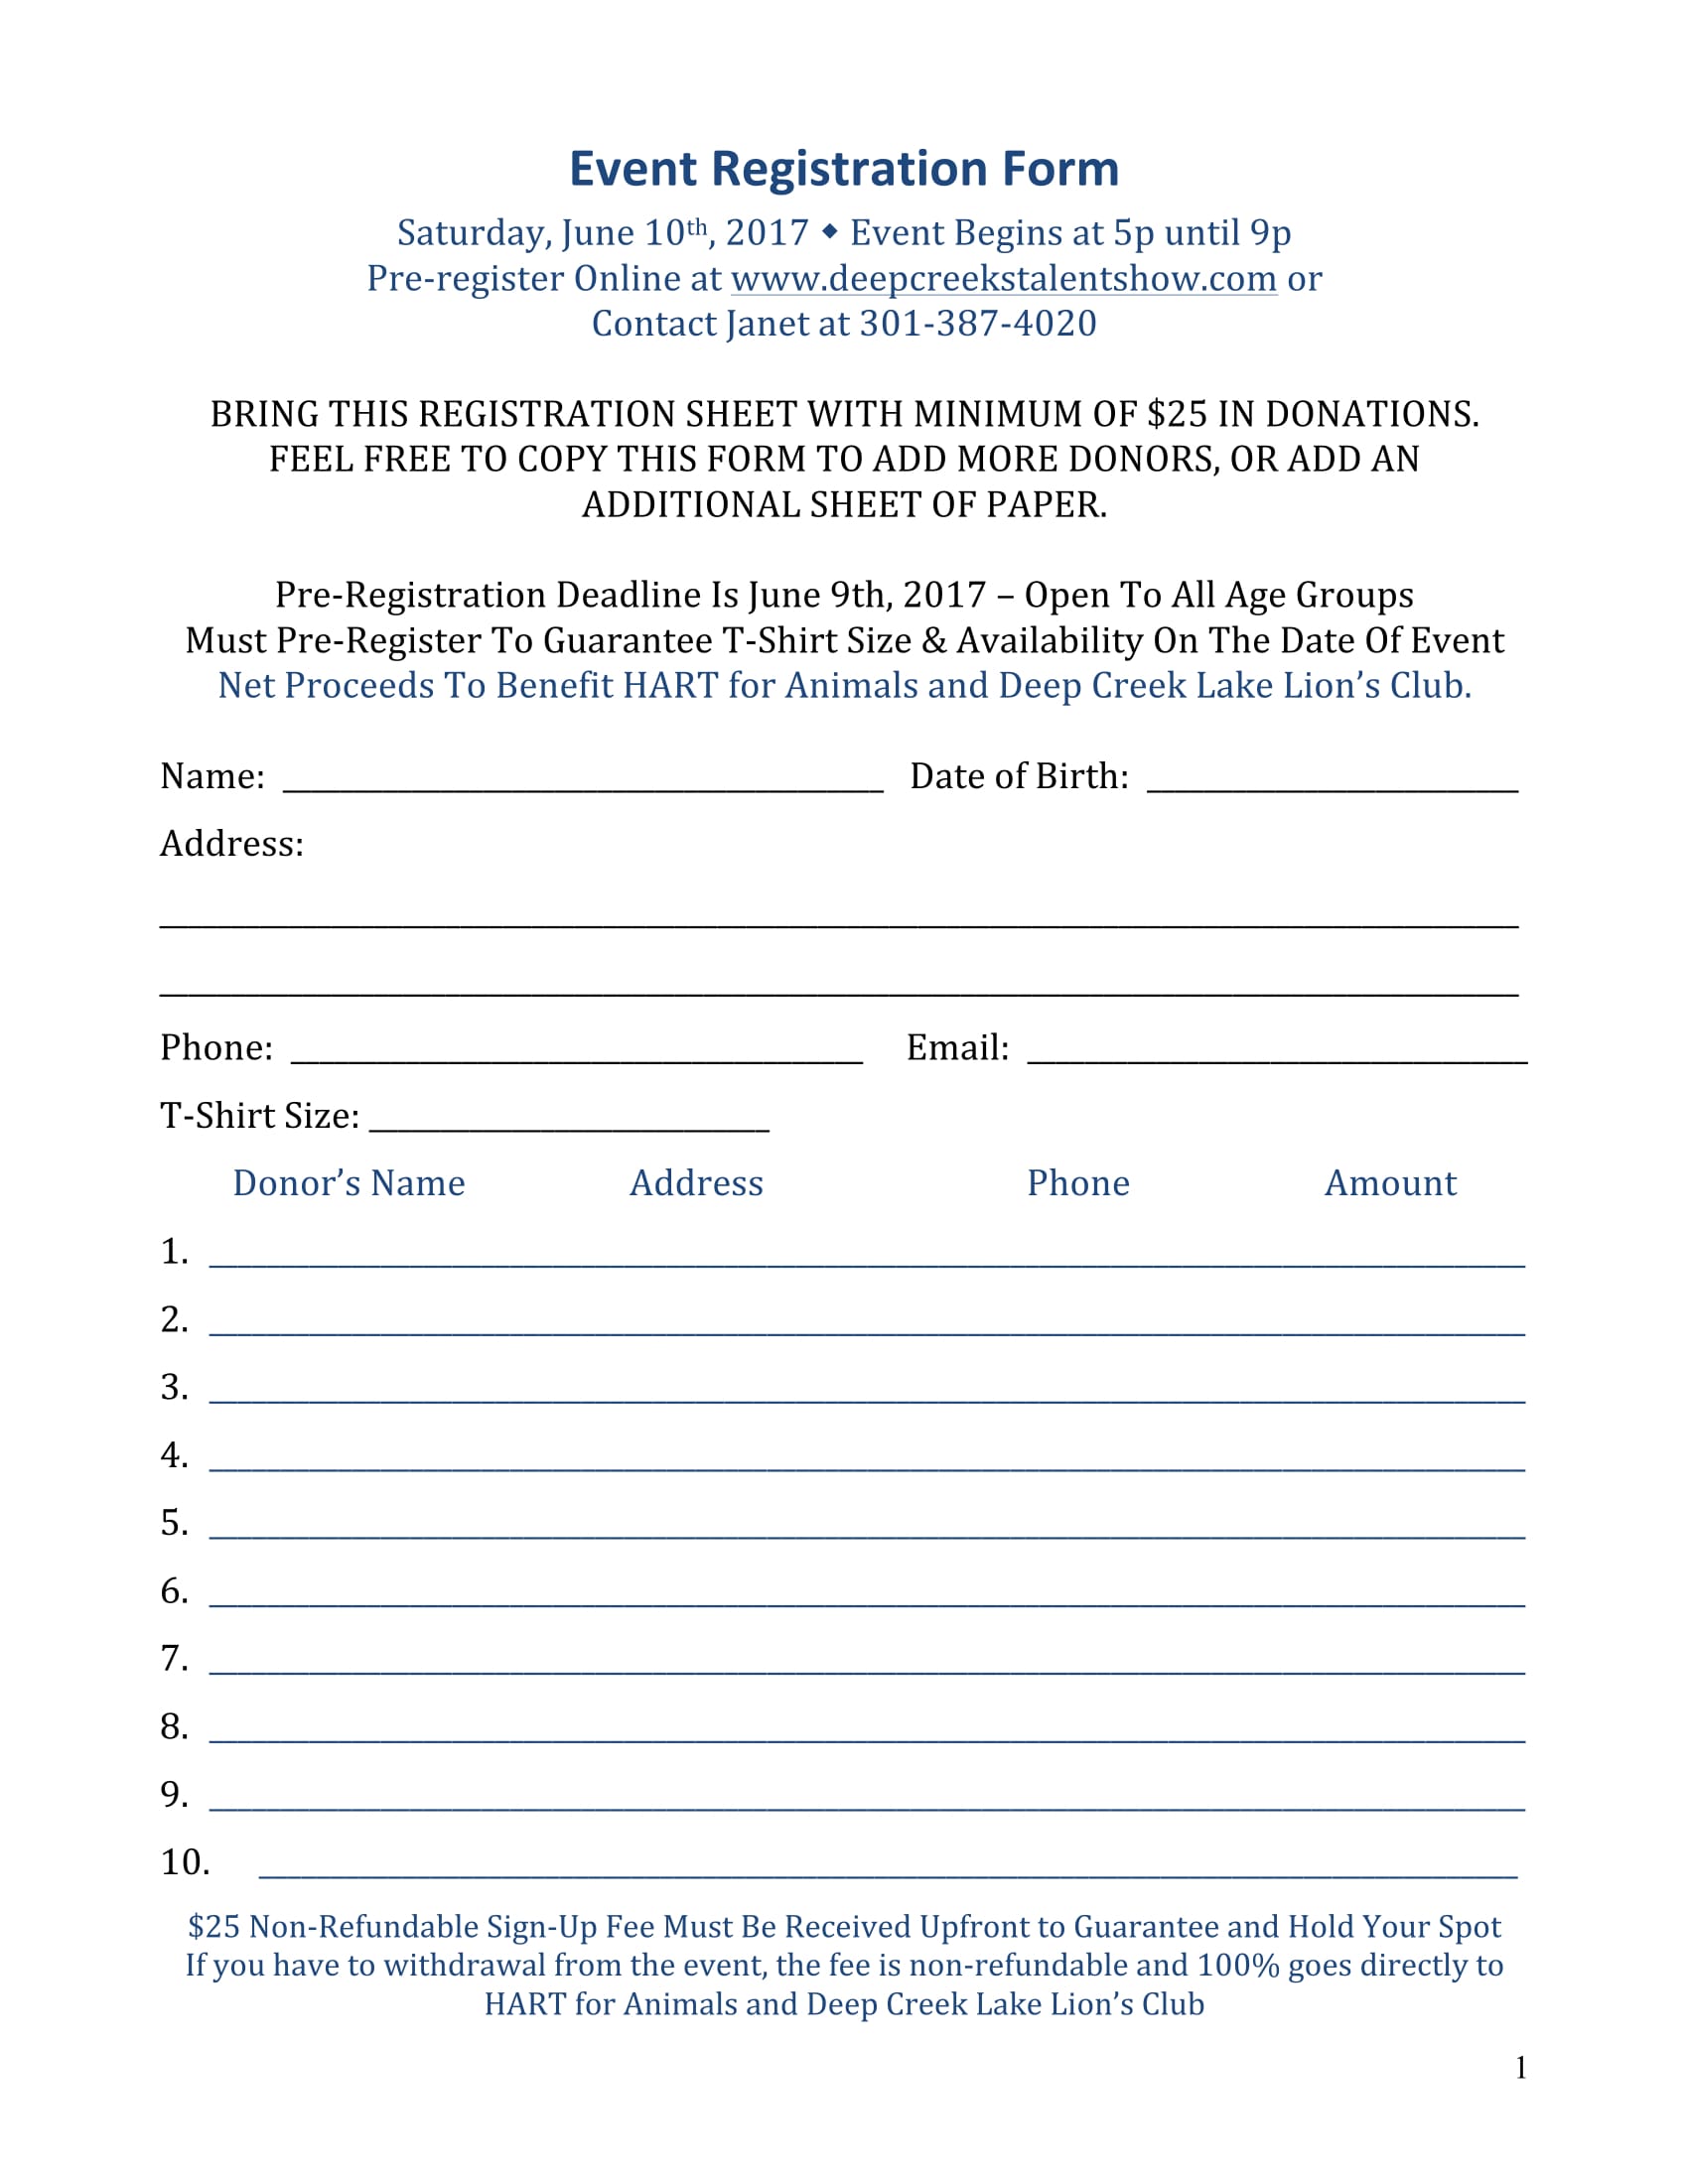 donation event registration form 1